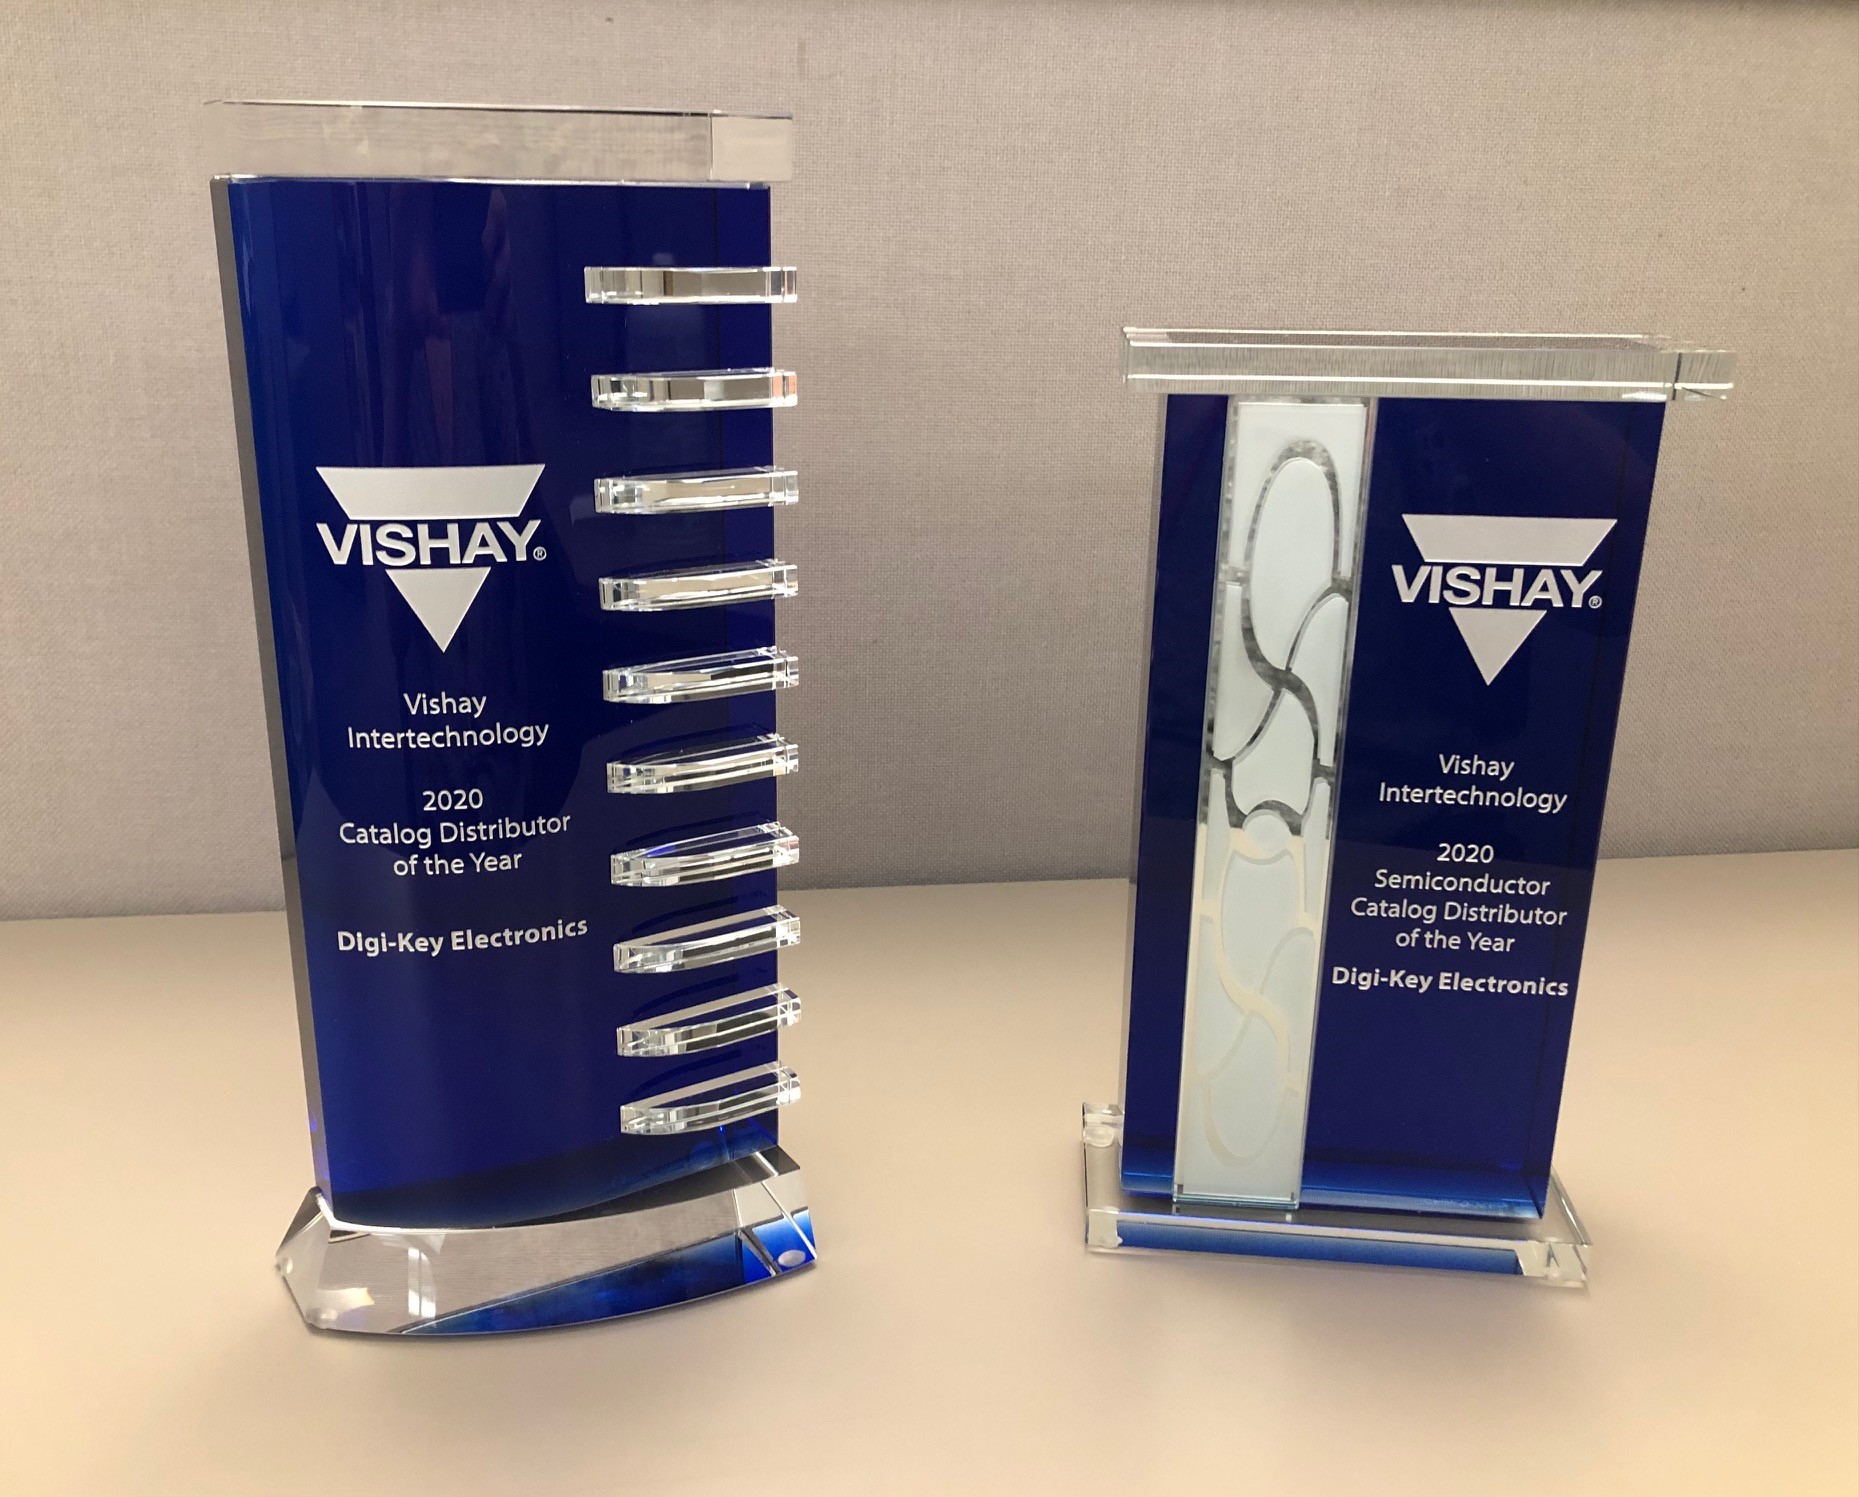 Digi-Key Electronics 获评 Vishay 北美年度目录分销商和年度目录半导体分销商